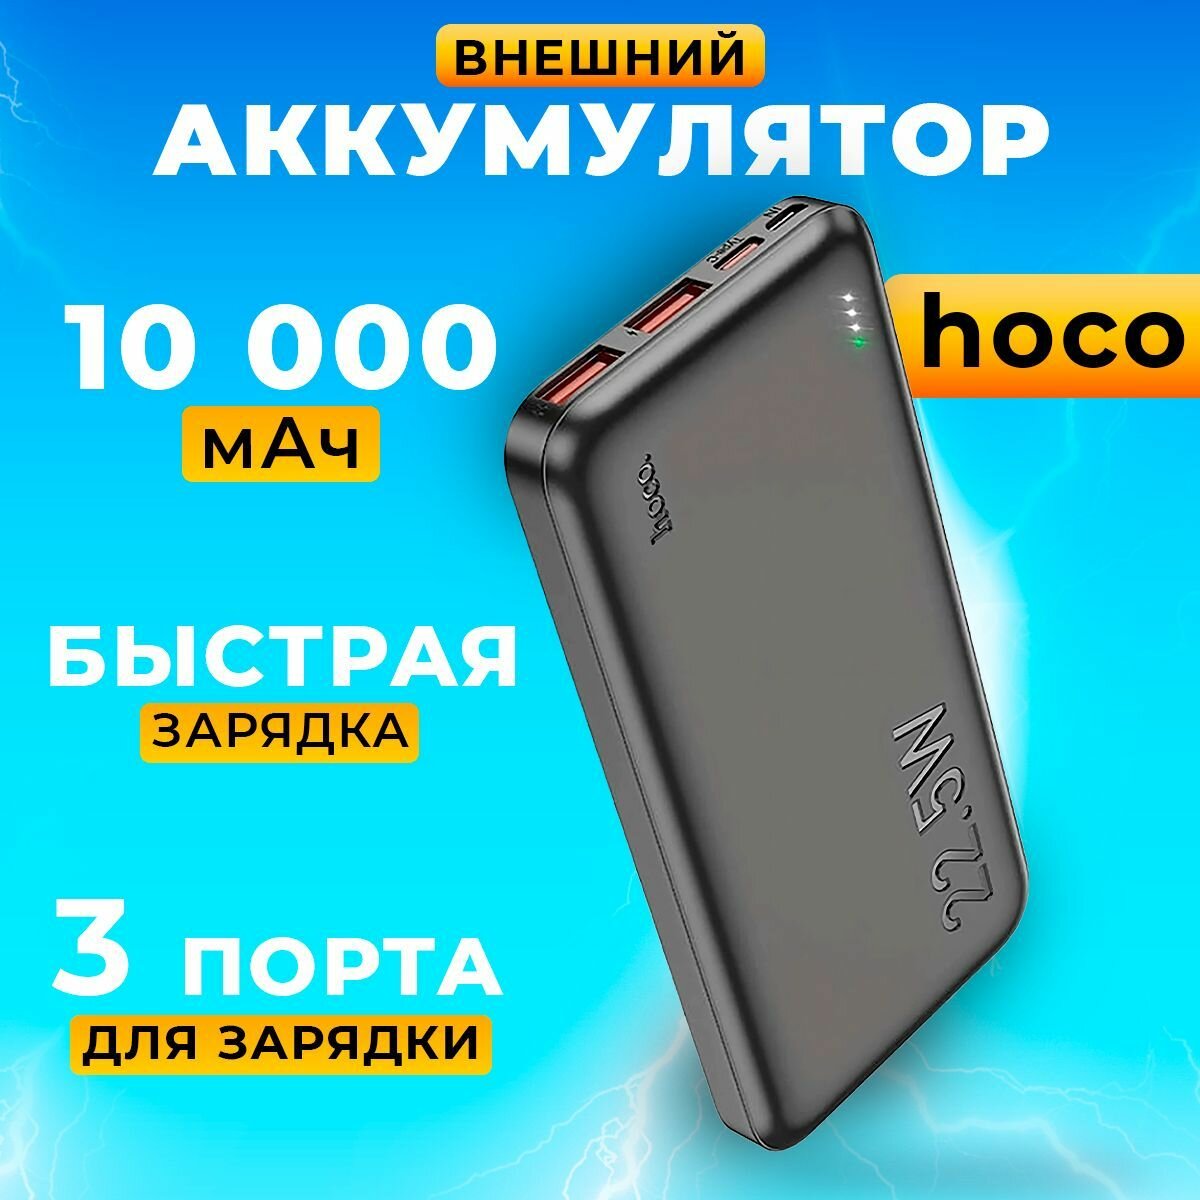 Внешний аккумулятор Hoco / Повербанк 10000 mAh Hoco J101 внешний аккумулятор пауэрбанк для телефона с разъемами Type-C USB